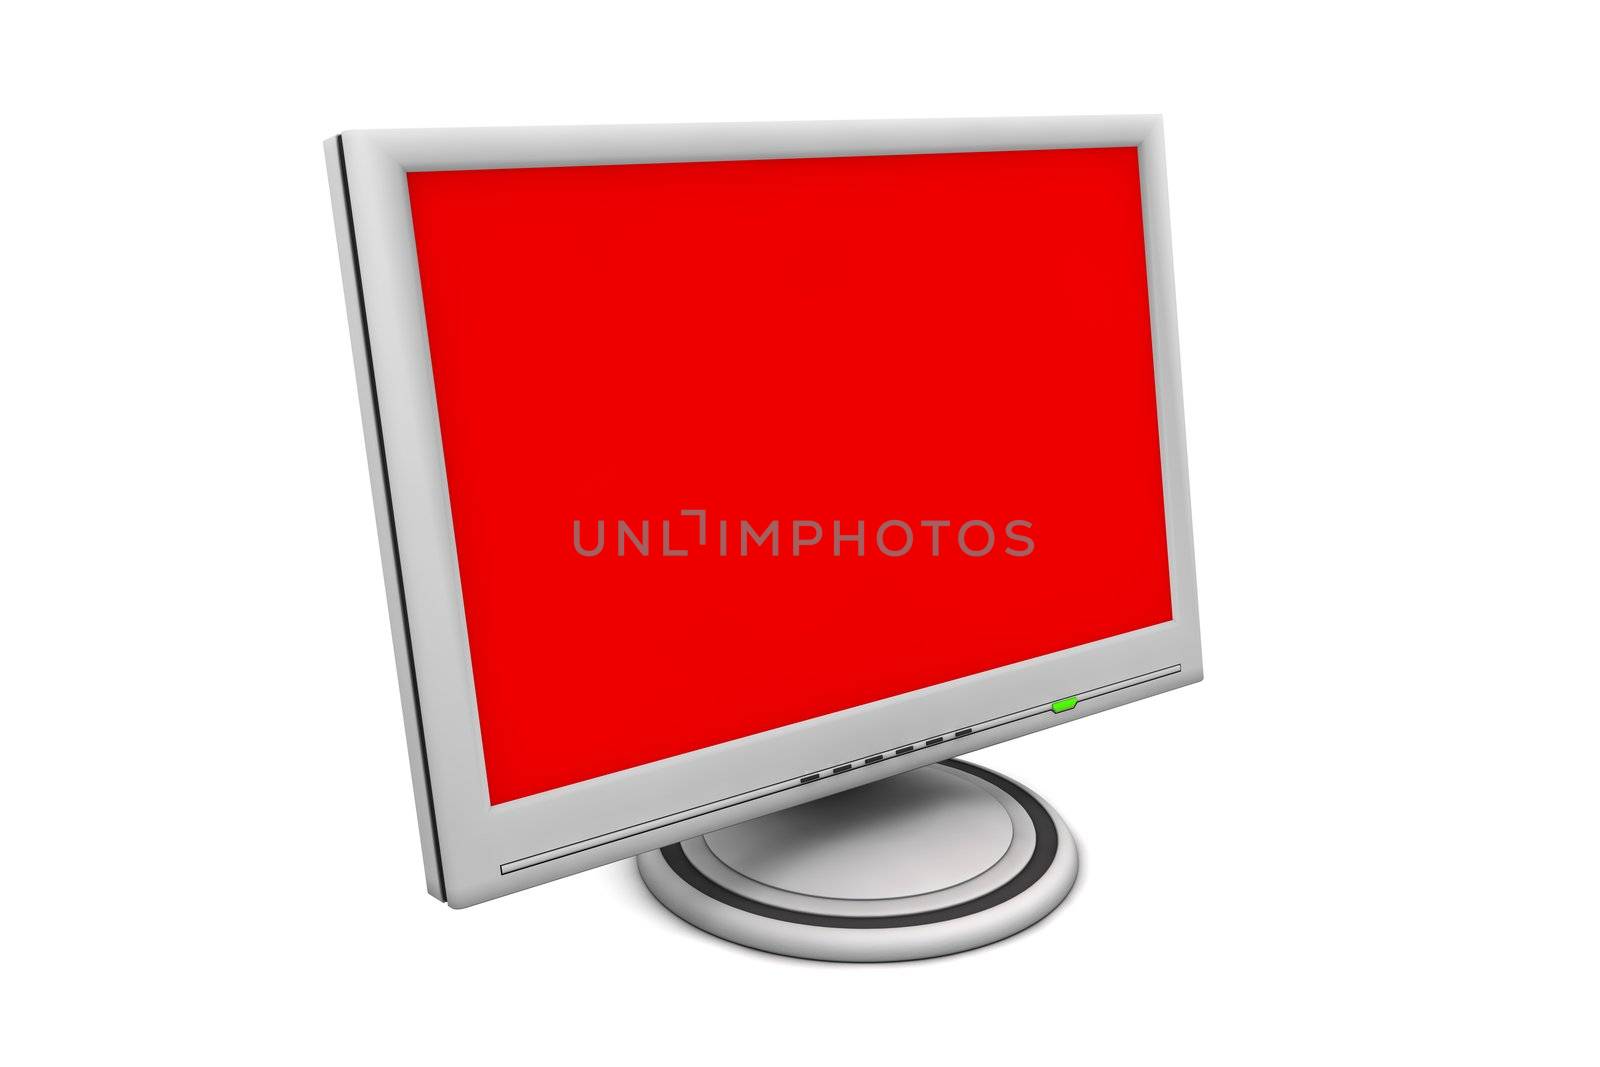 LCD Flat Screen Monitor by PixBox